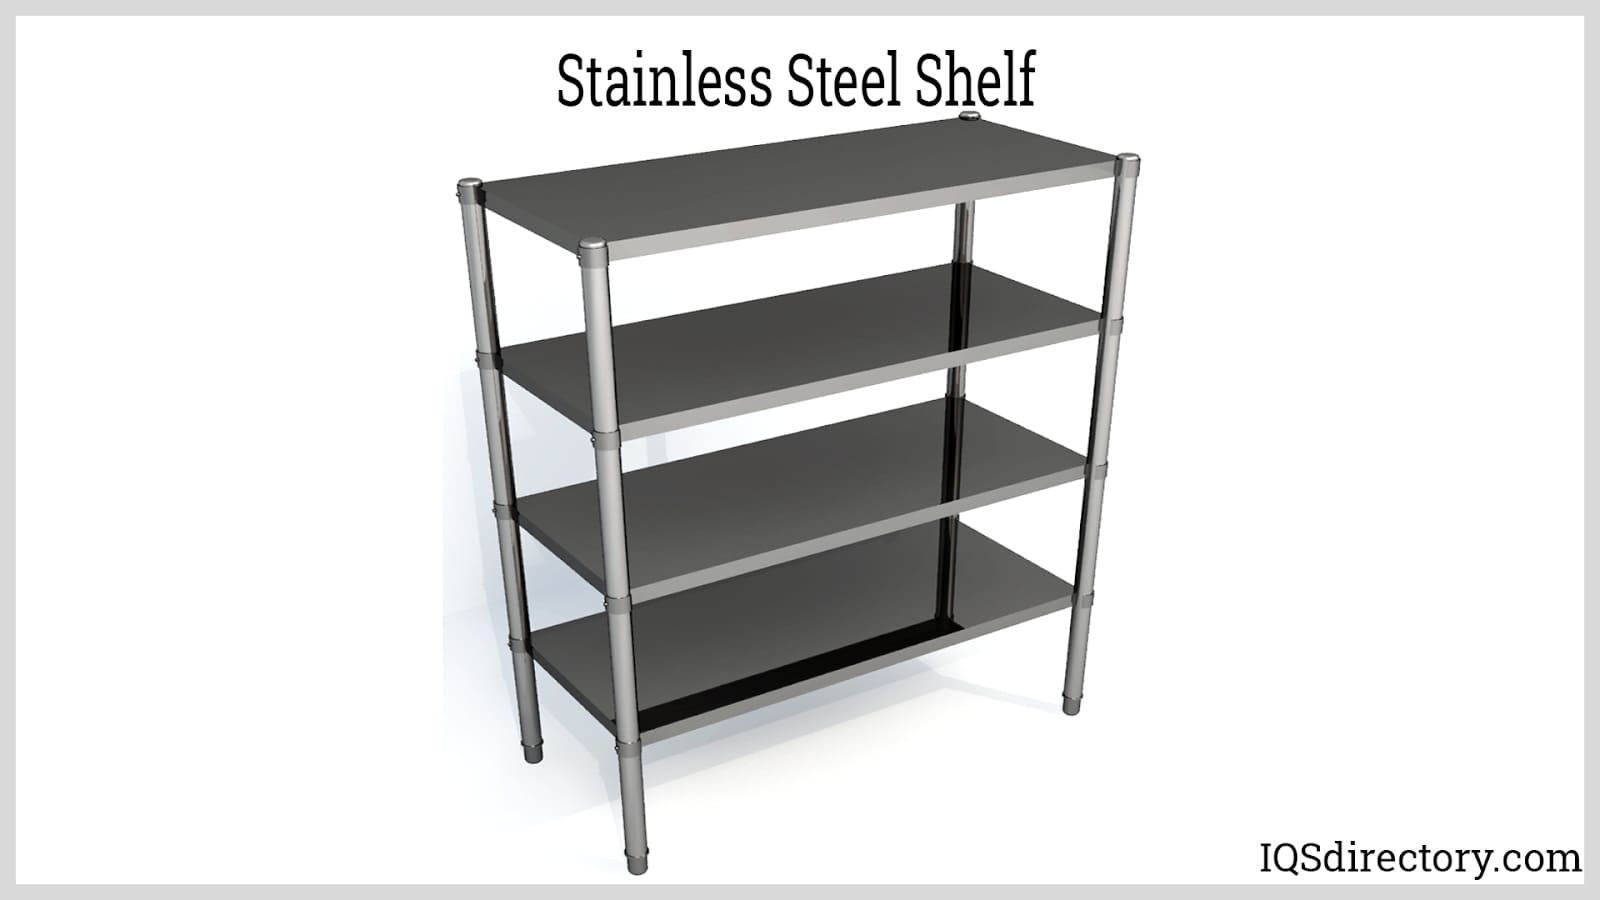 https://www.iqsdirectory.com/articles/steel-shelving/metal-shelving/stainless-steel-shelf.jpg